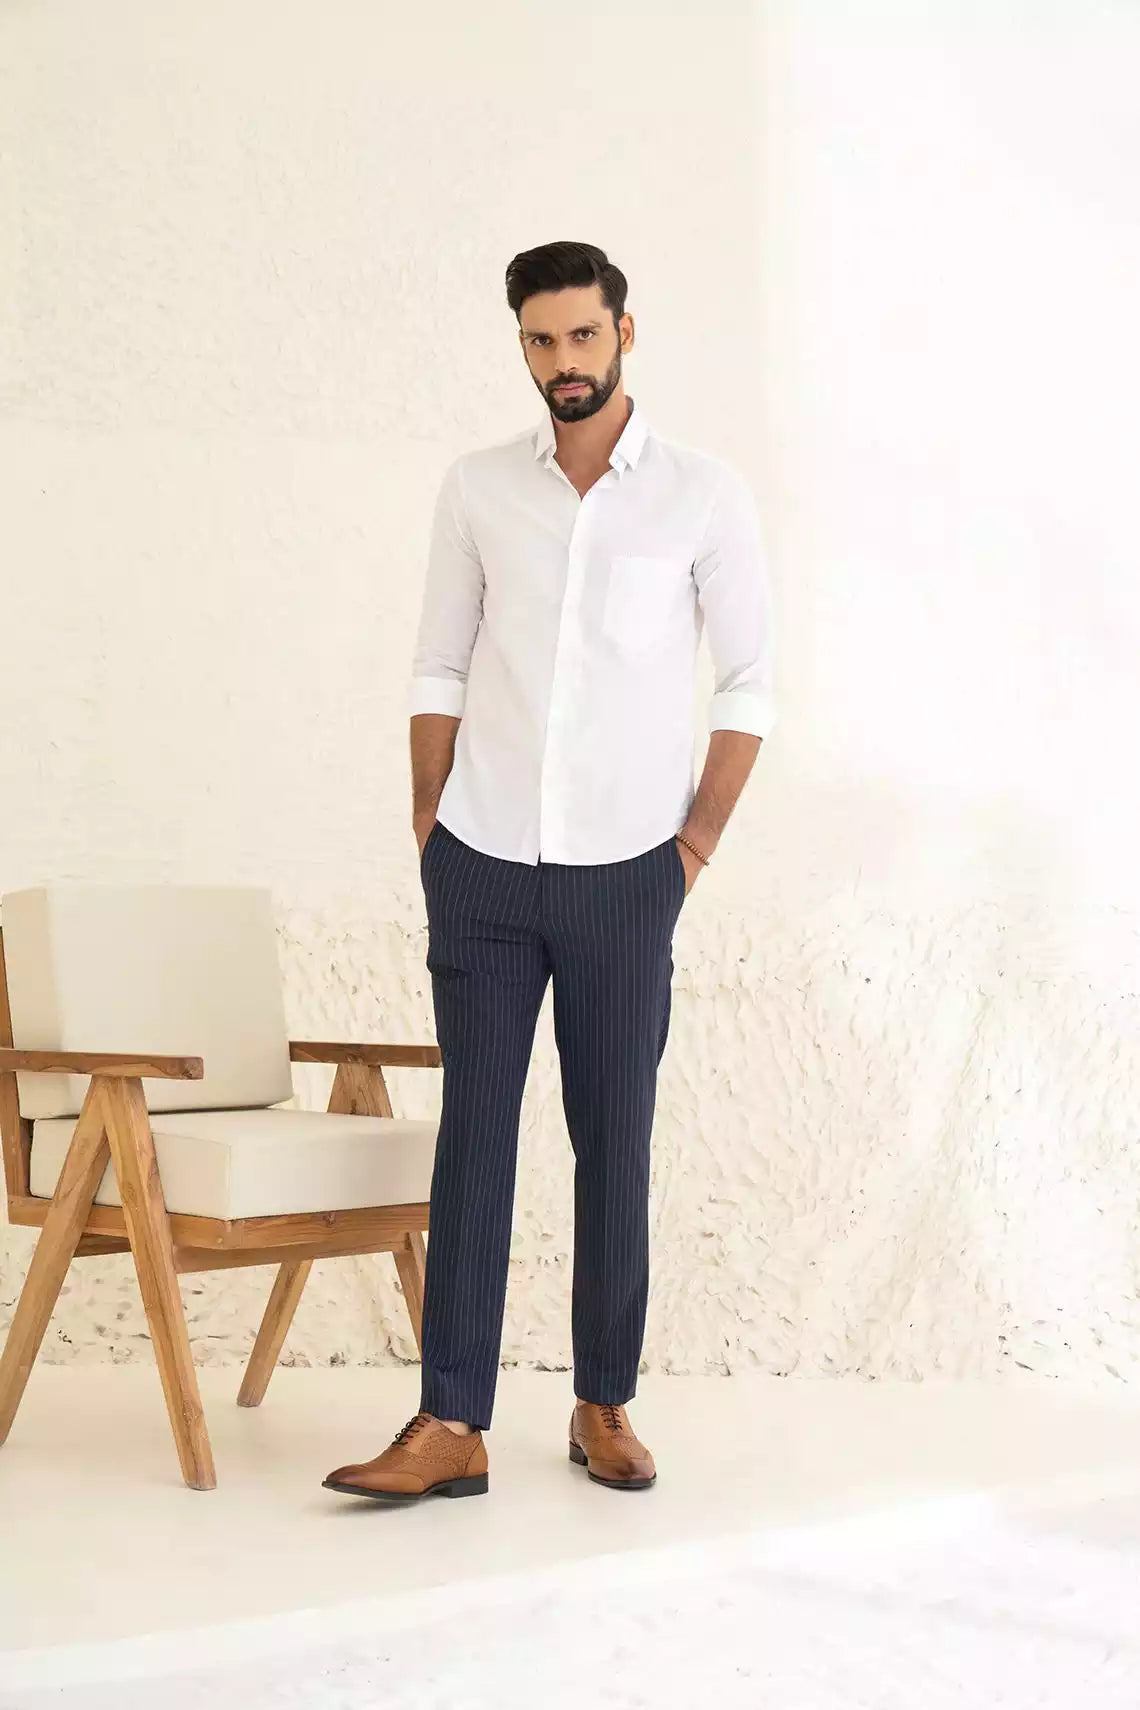 White Premium Men's Full Sleeves Plain Shirt Collection Cotton Fabric